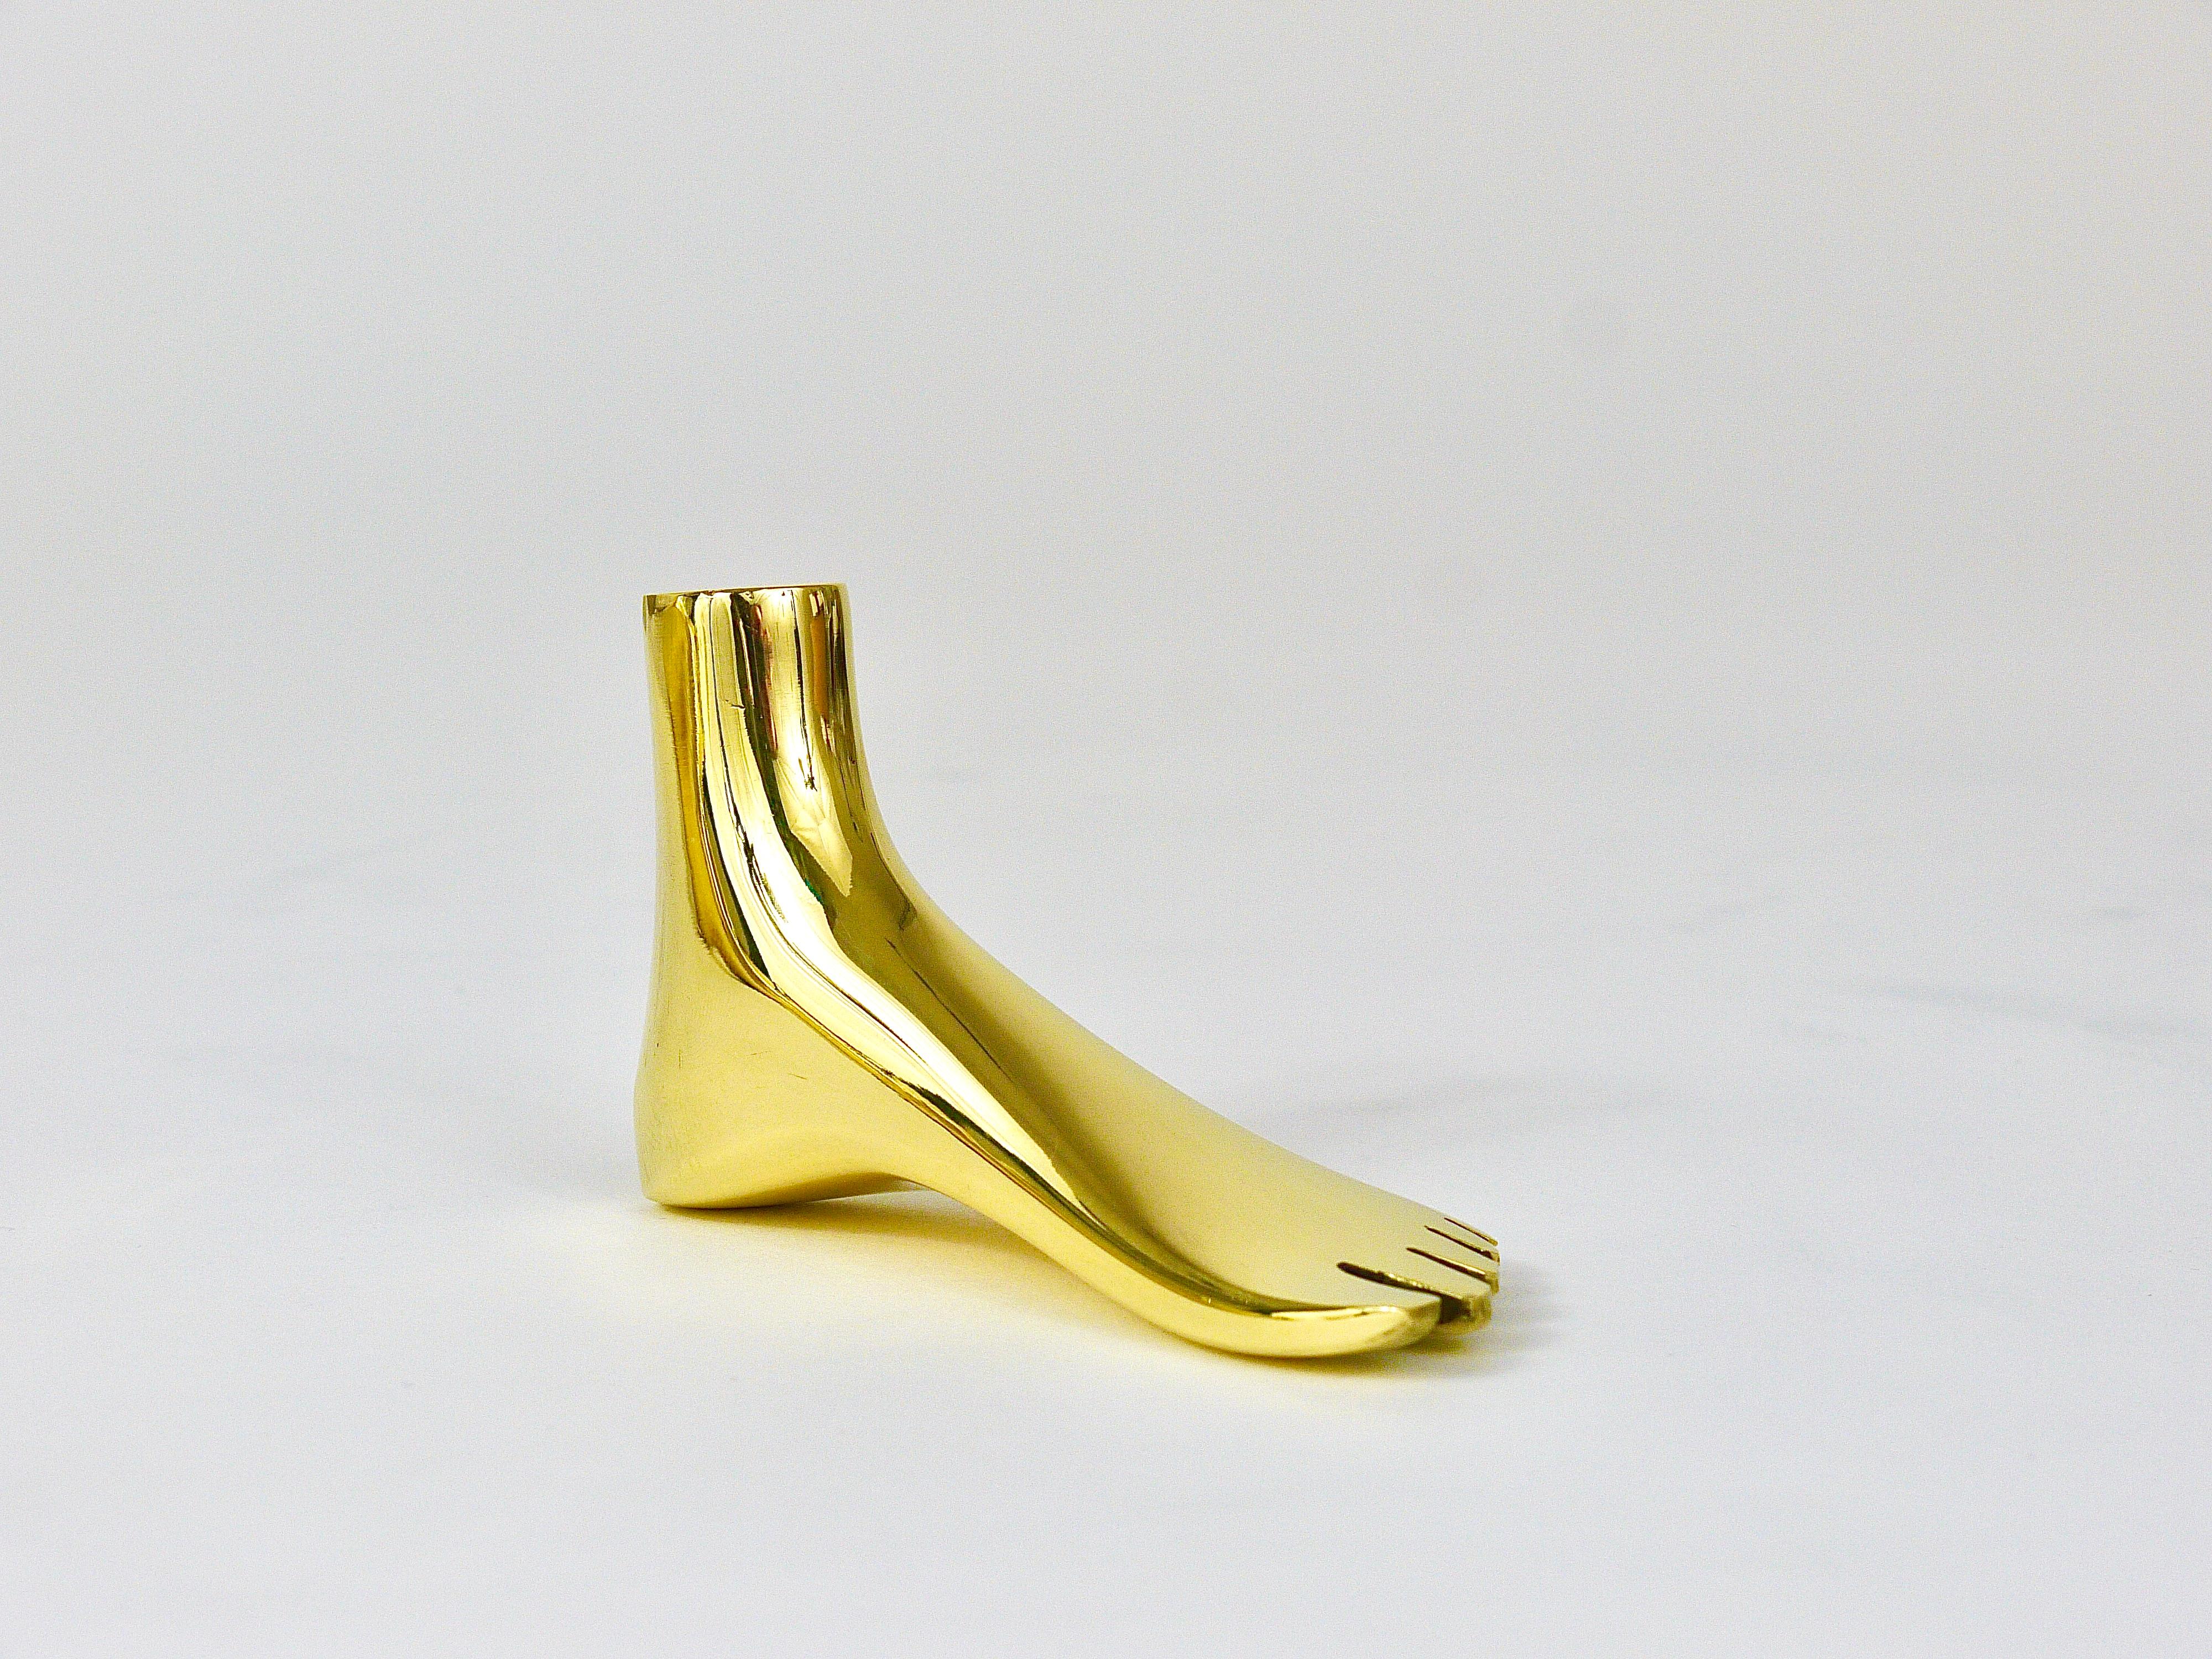 Austrian Signed Carl Auböck Midcentury Brass Foot Paperweight Handmade Sculpture For Sale